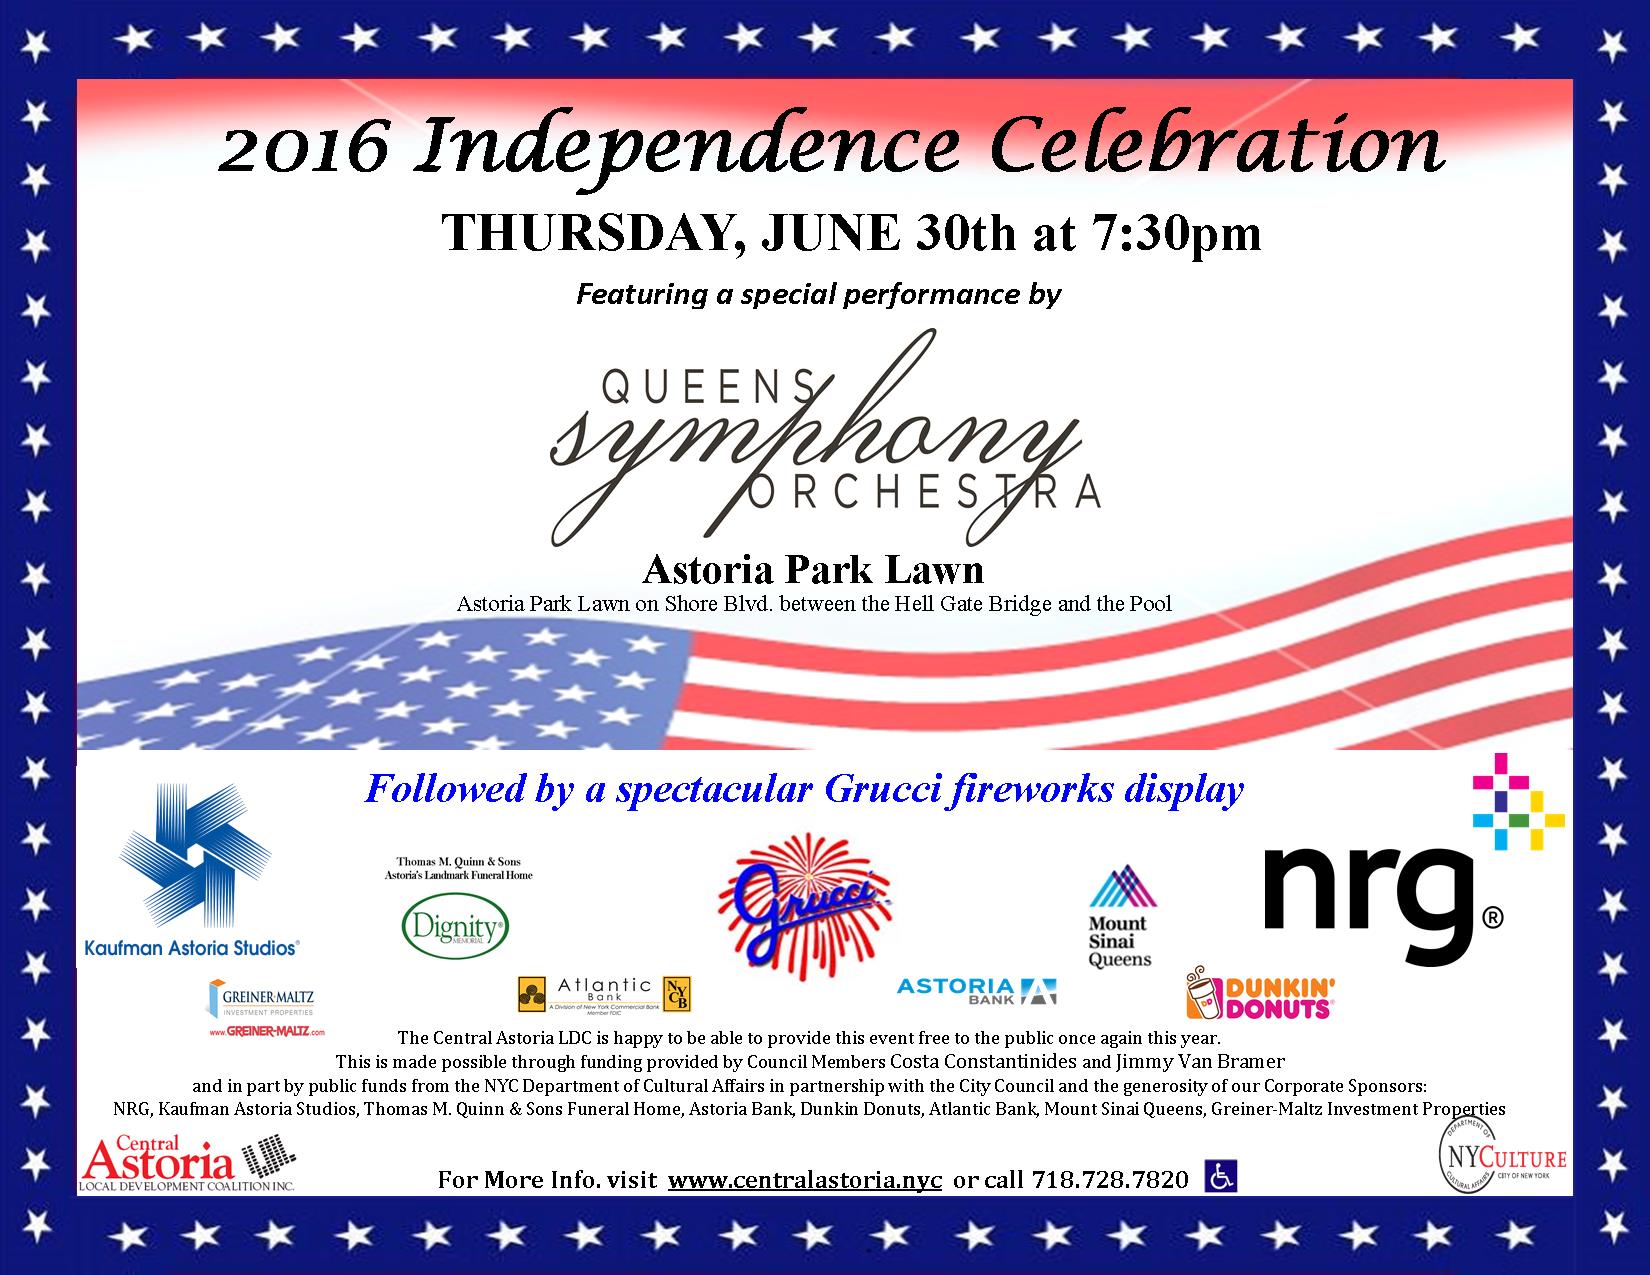 2016 Independence Celebration FINAL with sponsorship logos.jpg